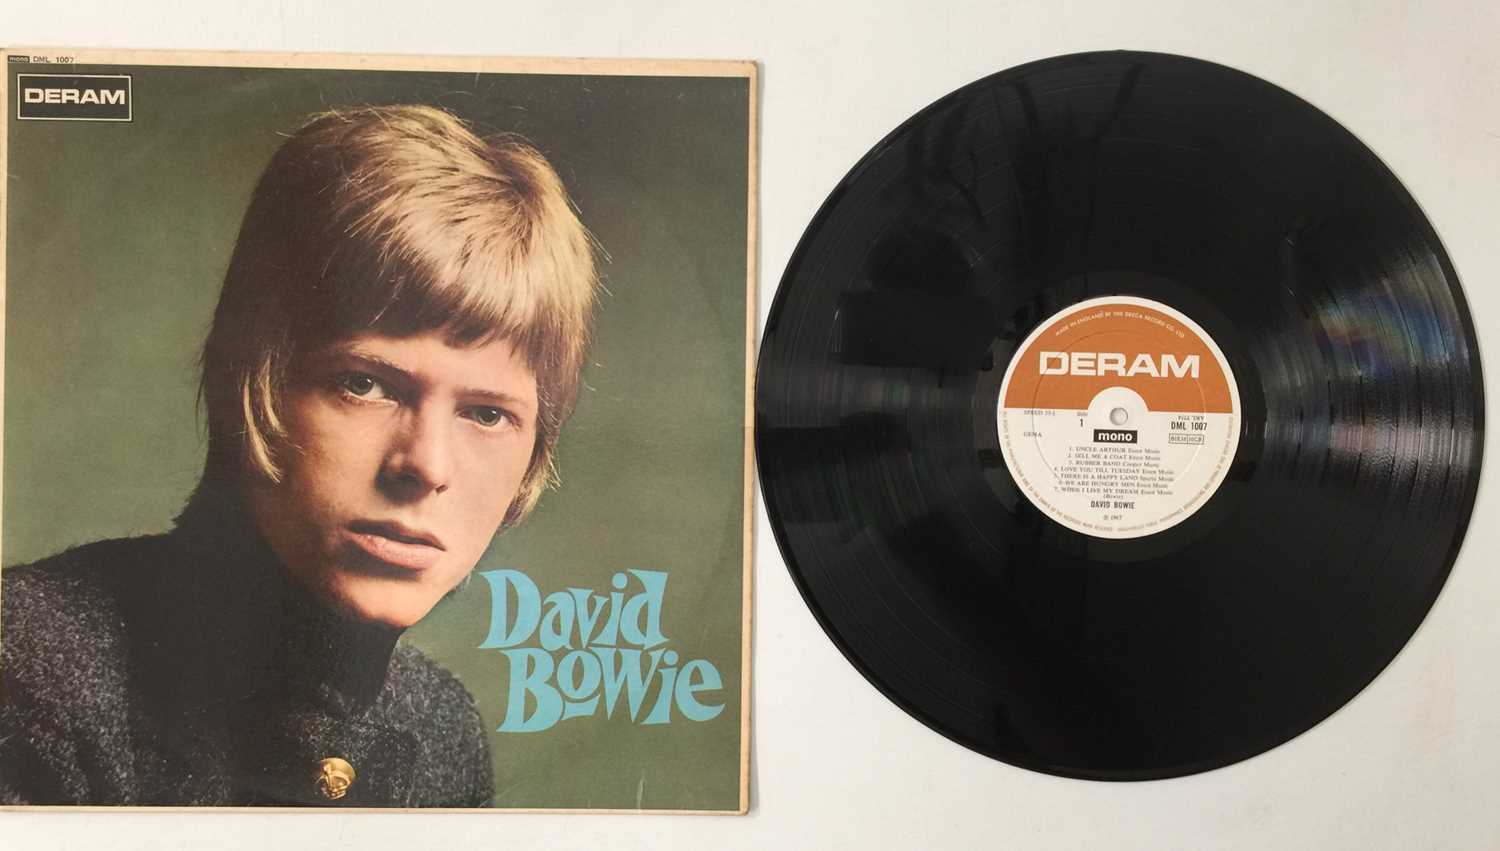 Lot 573 - DAVID BOWIE - DAVID BOWIE LP (ORIGINAL UK MONO COPY - DERAM DML 1007)